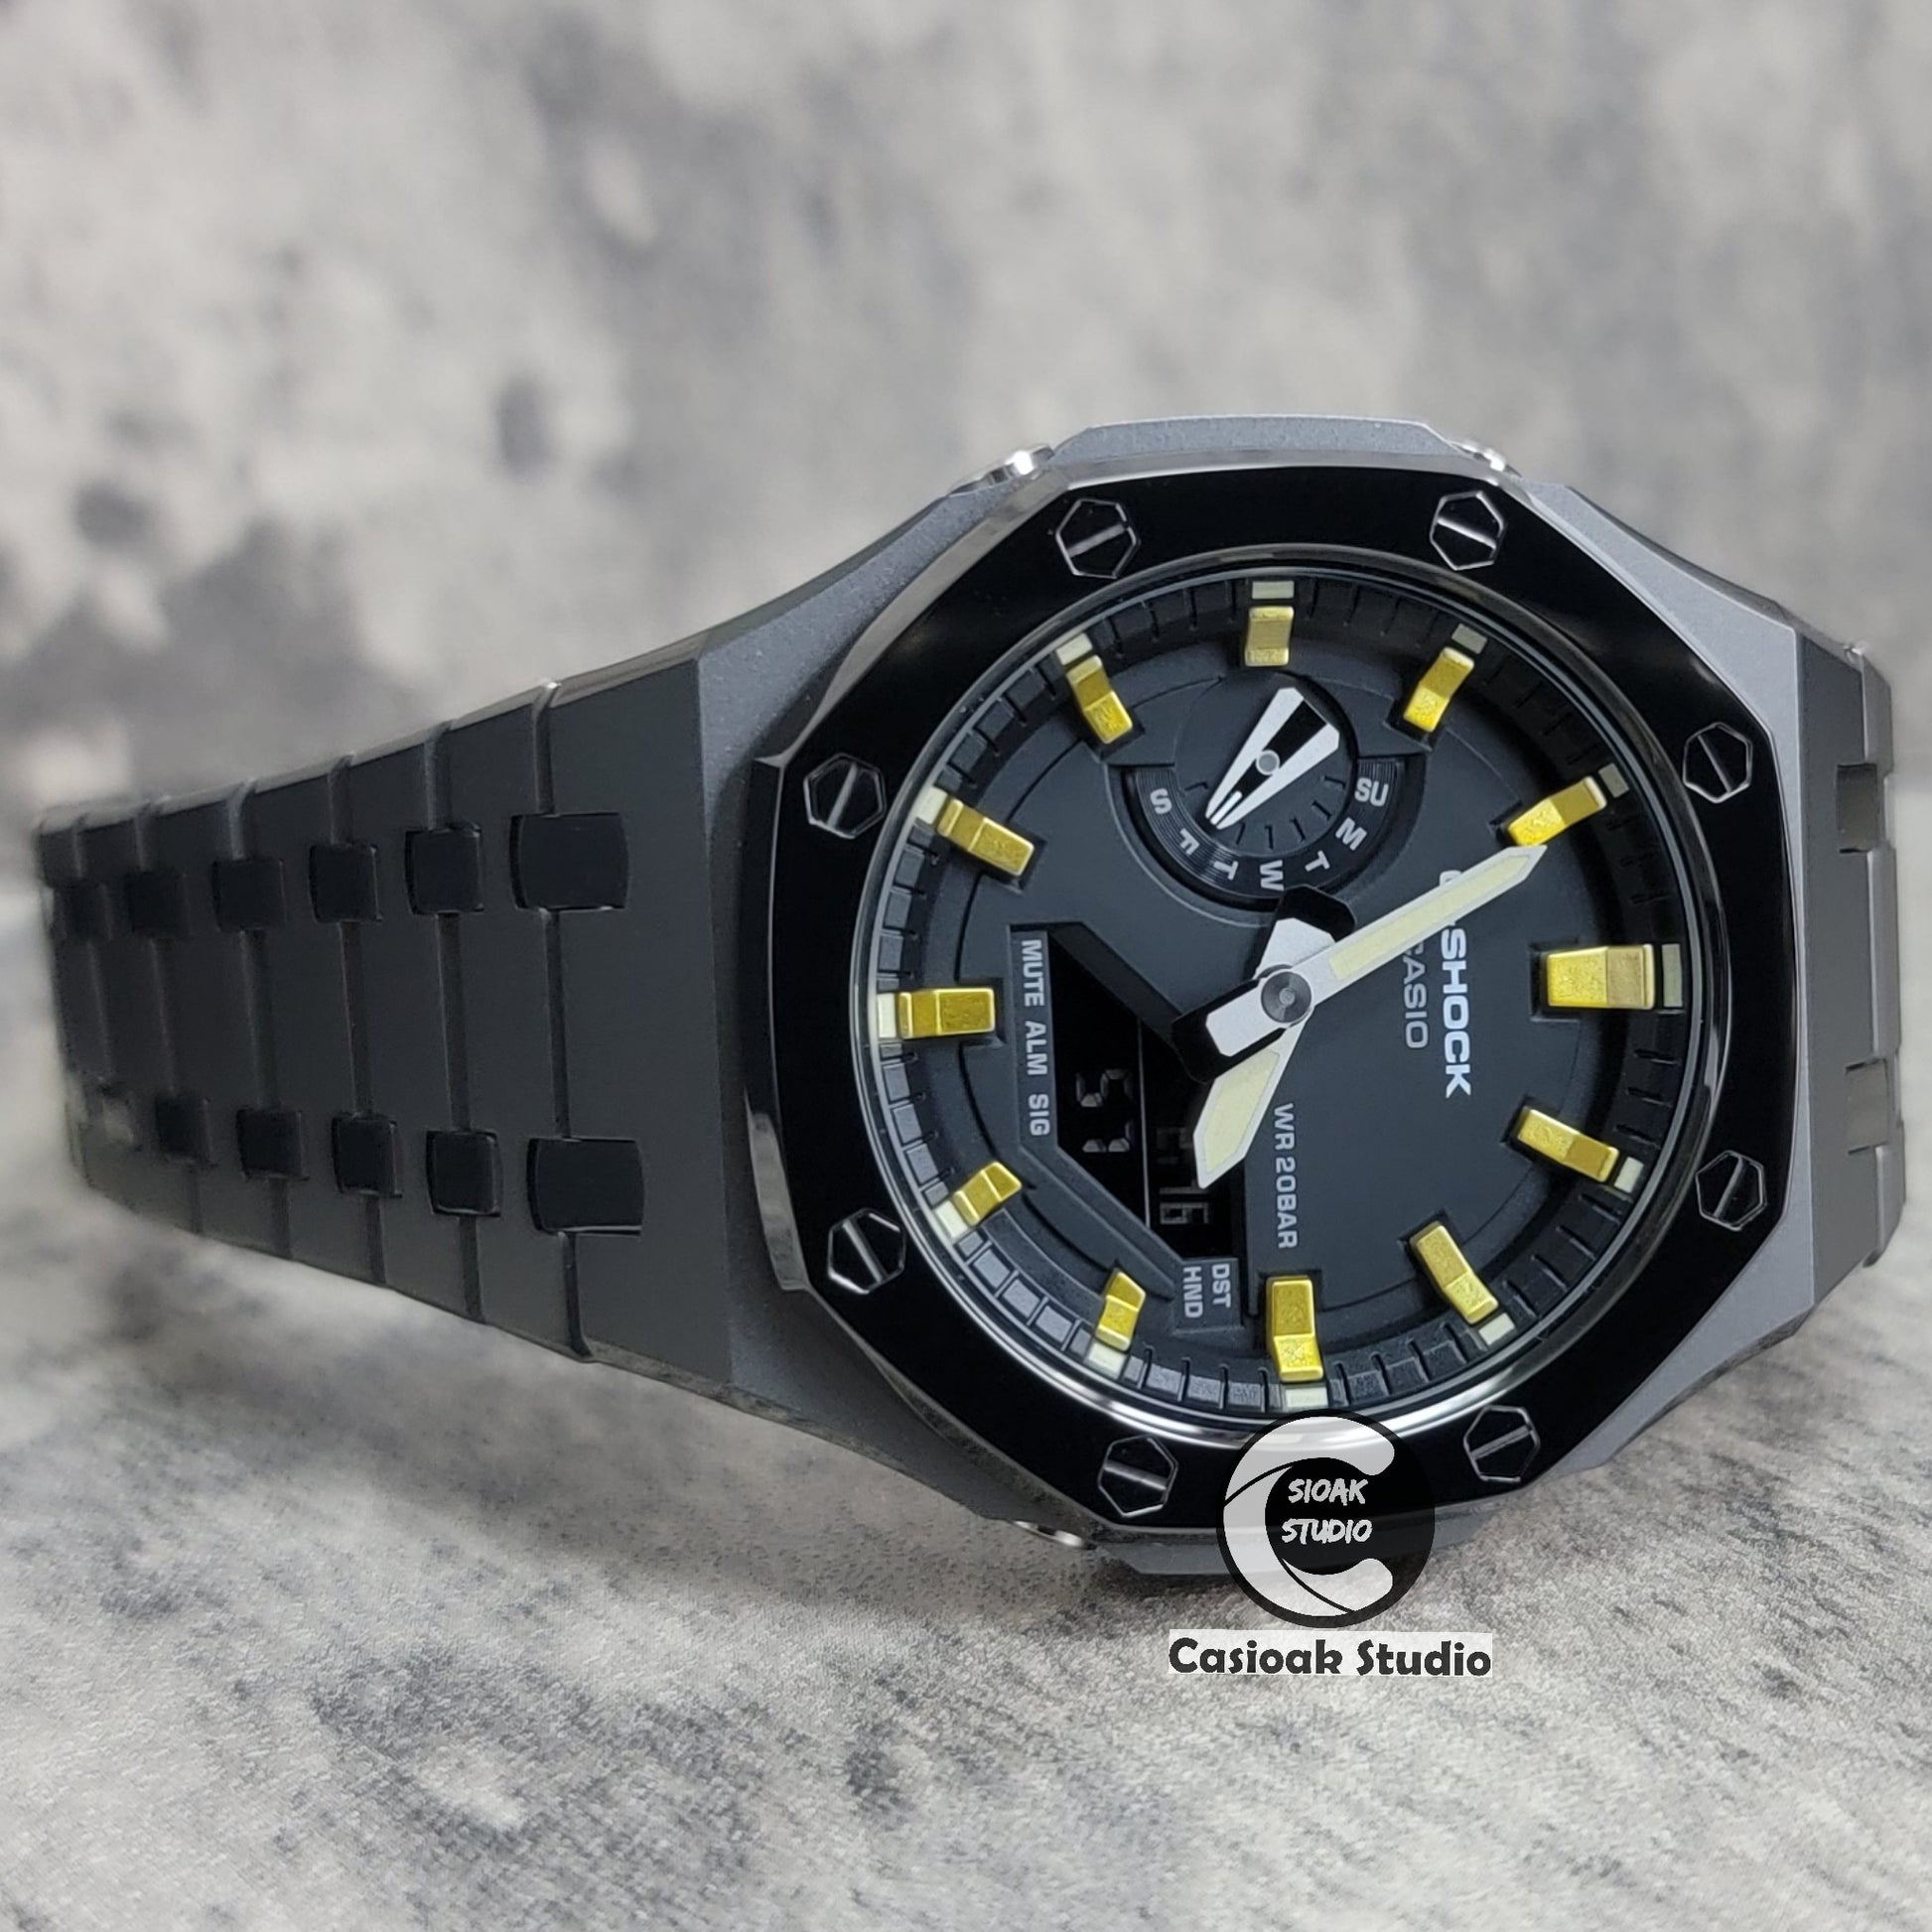 Casioak Mod Watch Polished Grey Case Metal Strap Gold Time Mark Black Dial 44mm - Casioak Studio